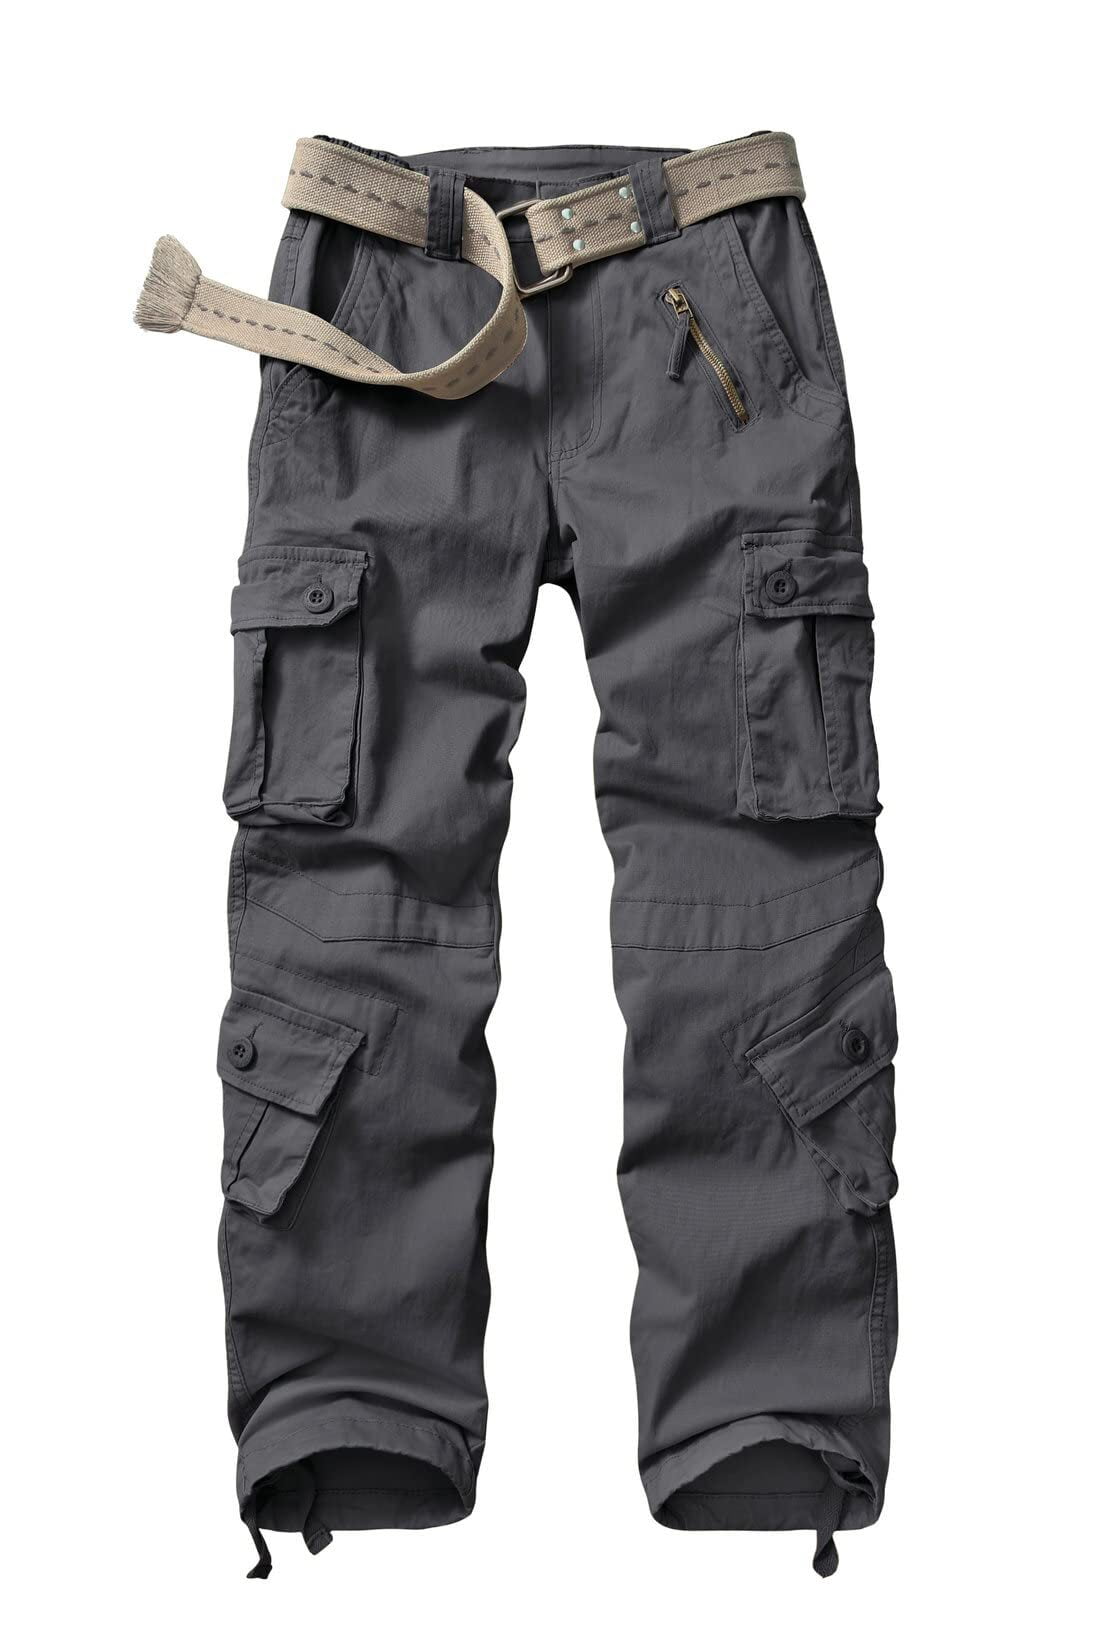 Omthaka Women's Cotton Cargo Pants with 8 Pocket,Grey Size 14 - Walmart.com